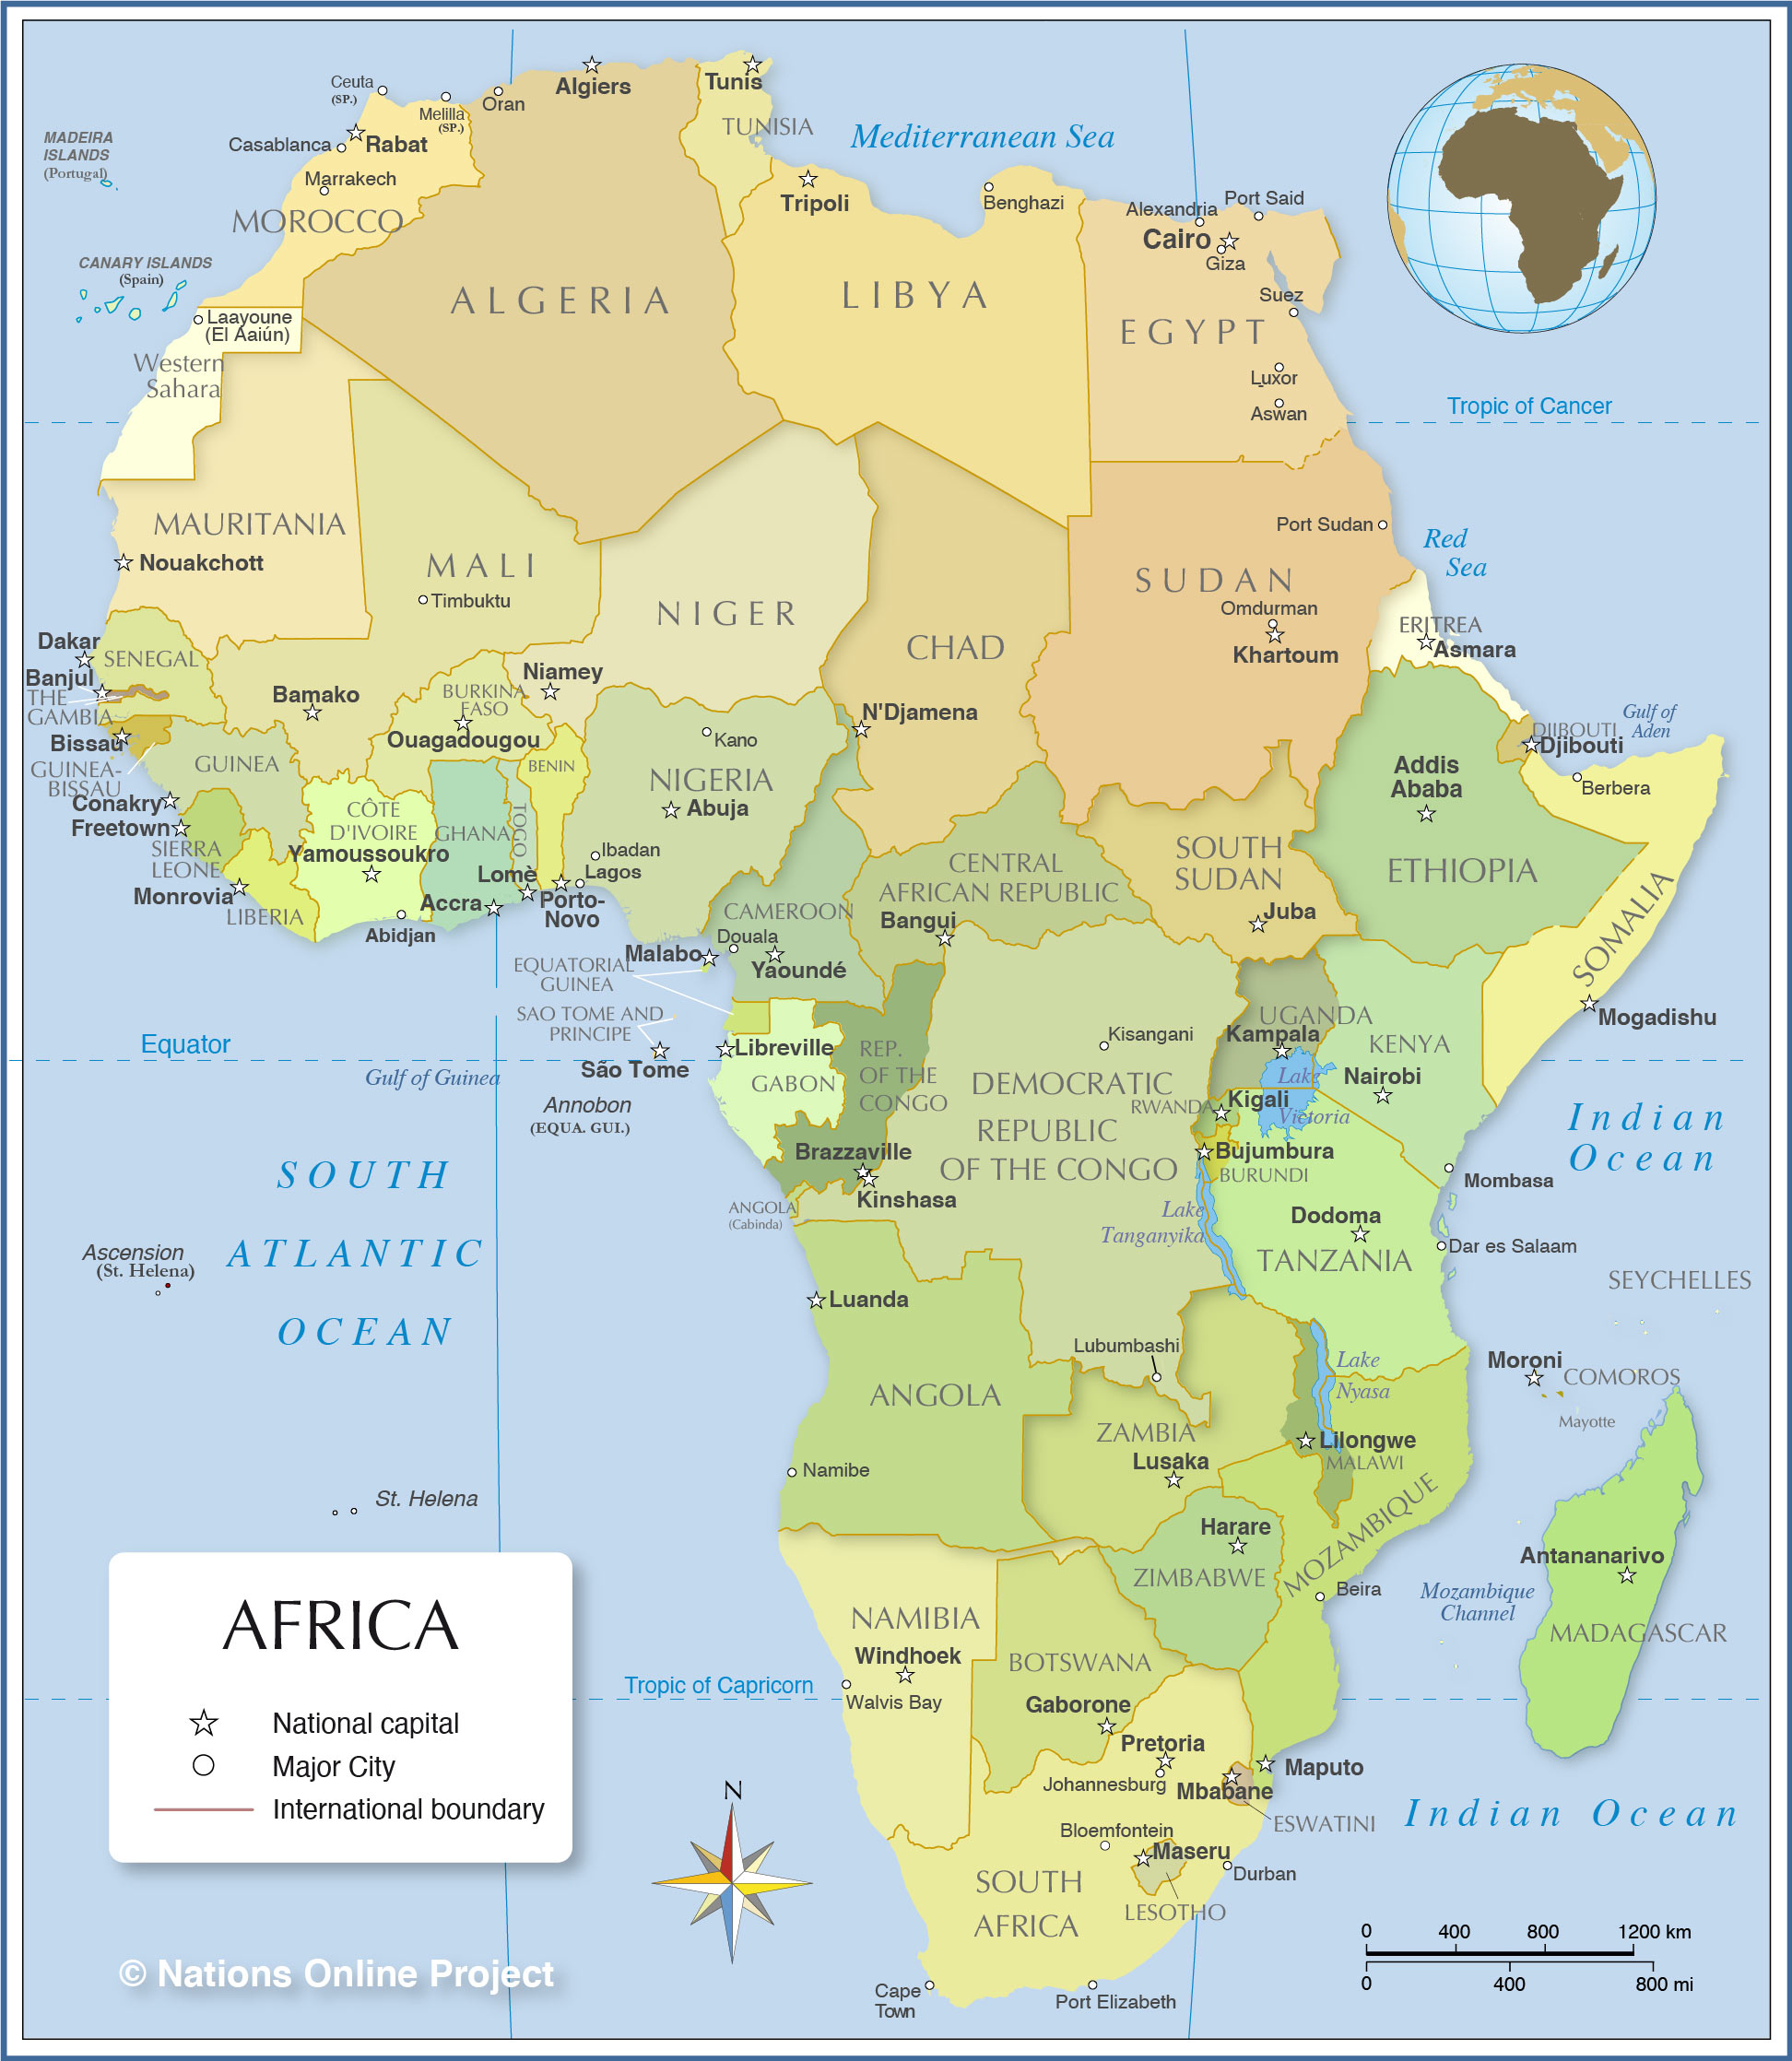 Africa Political Map 